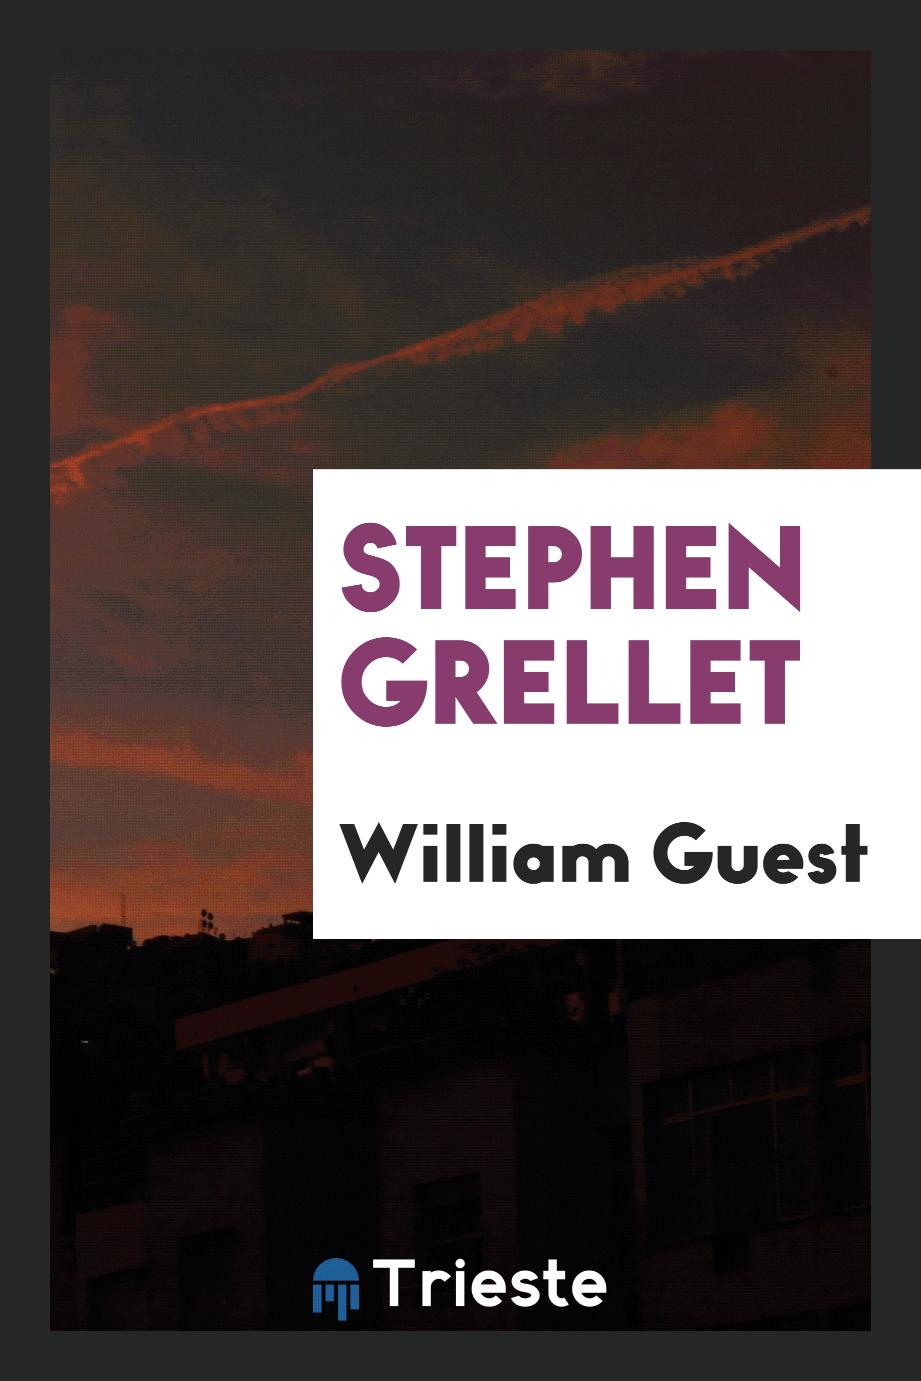 Stephen Grellet